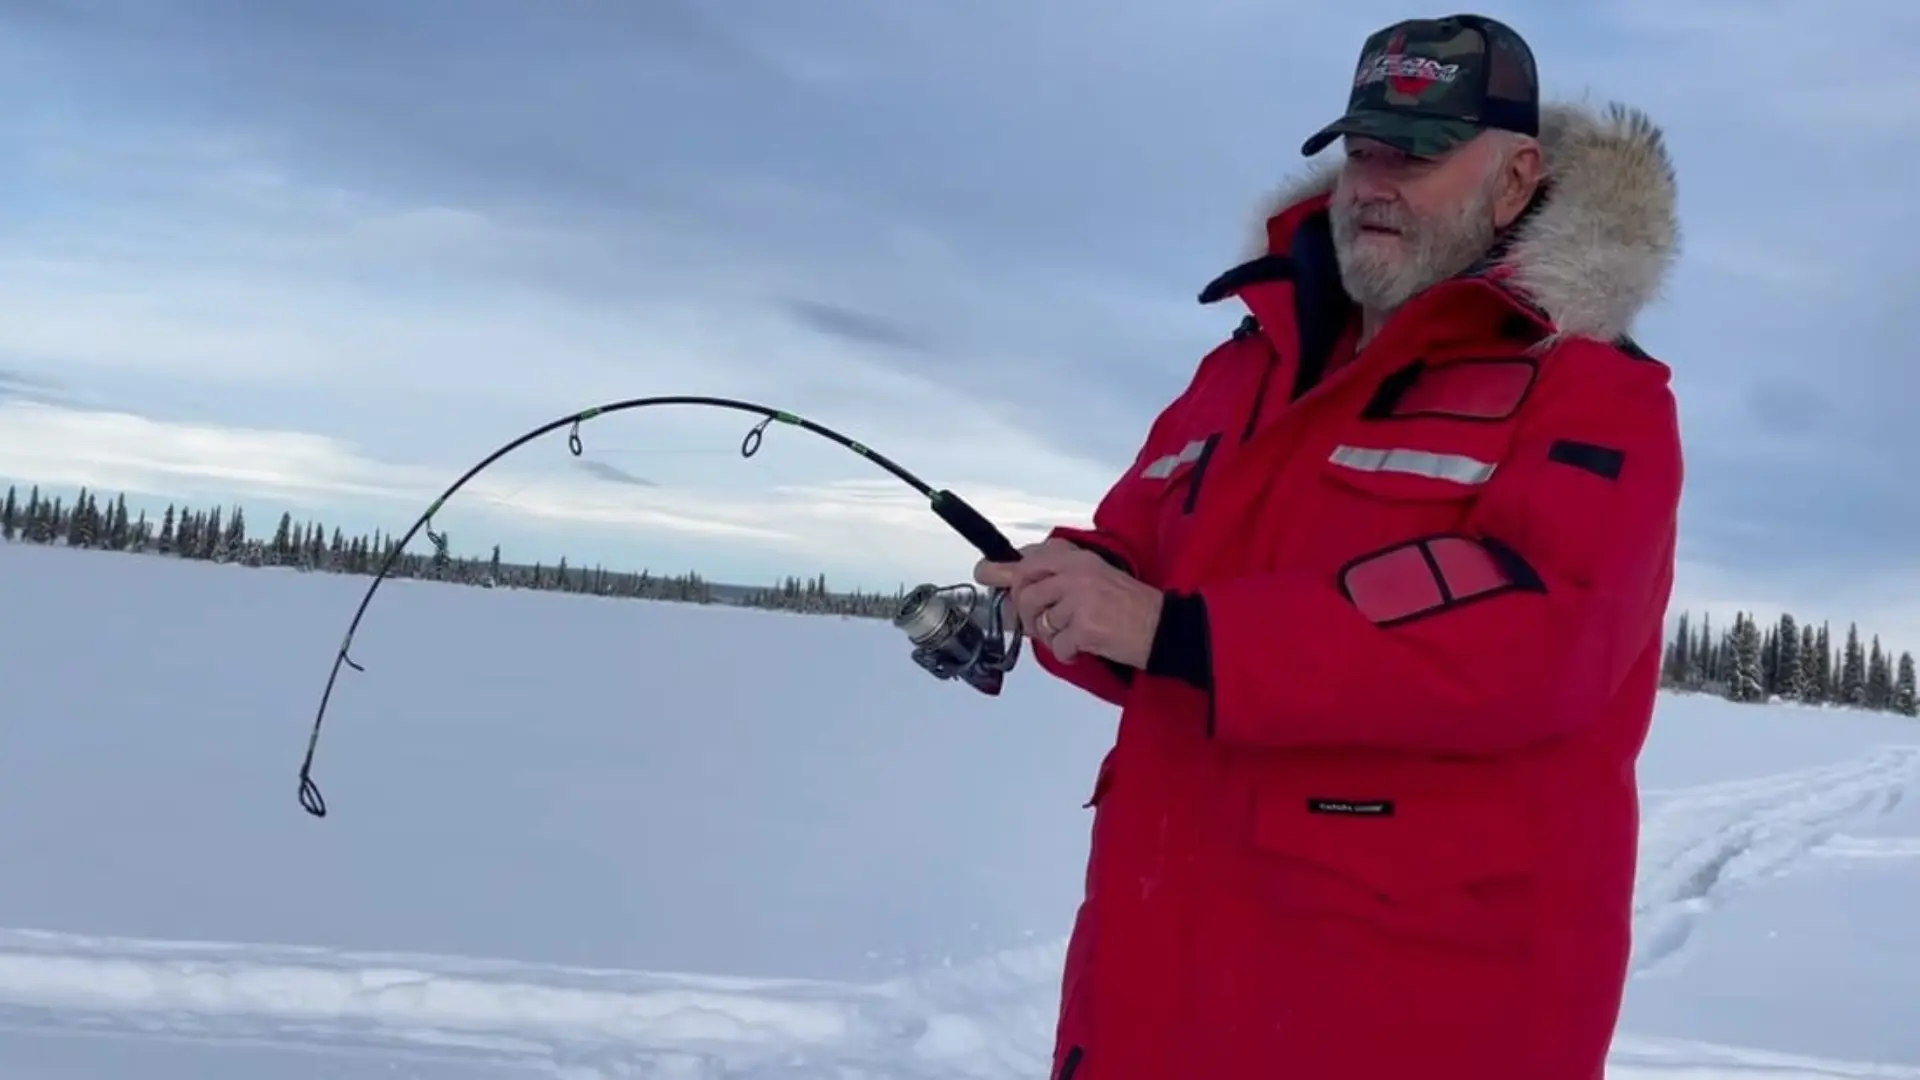 PLUSINNO Ultralight Winter Ice Fishing Rod